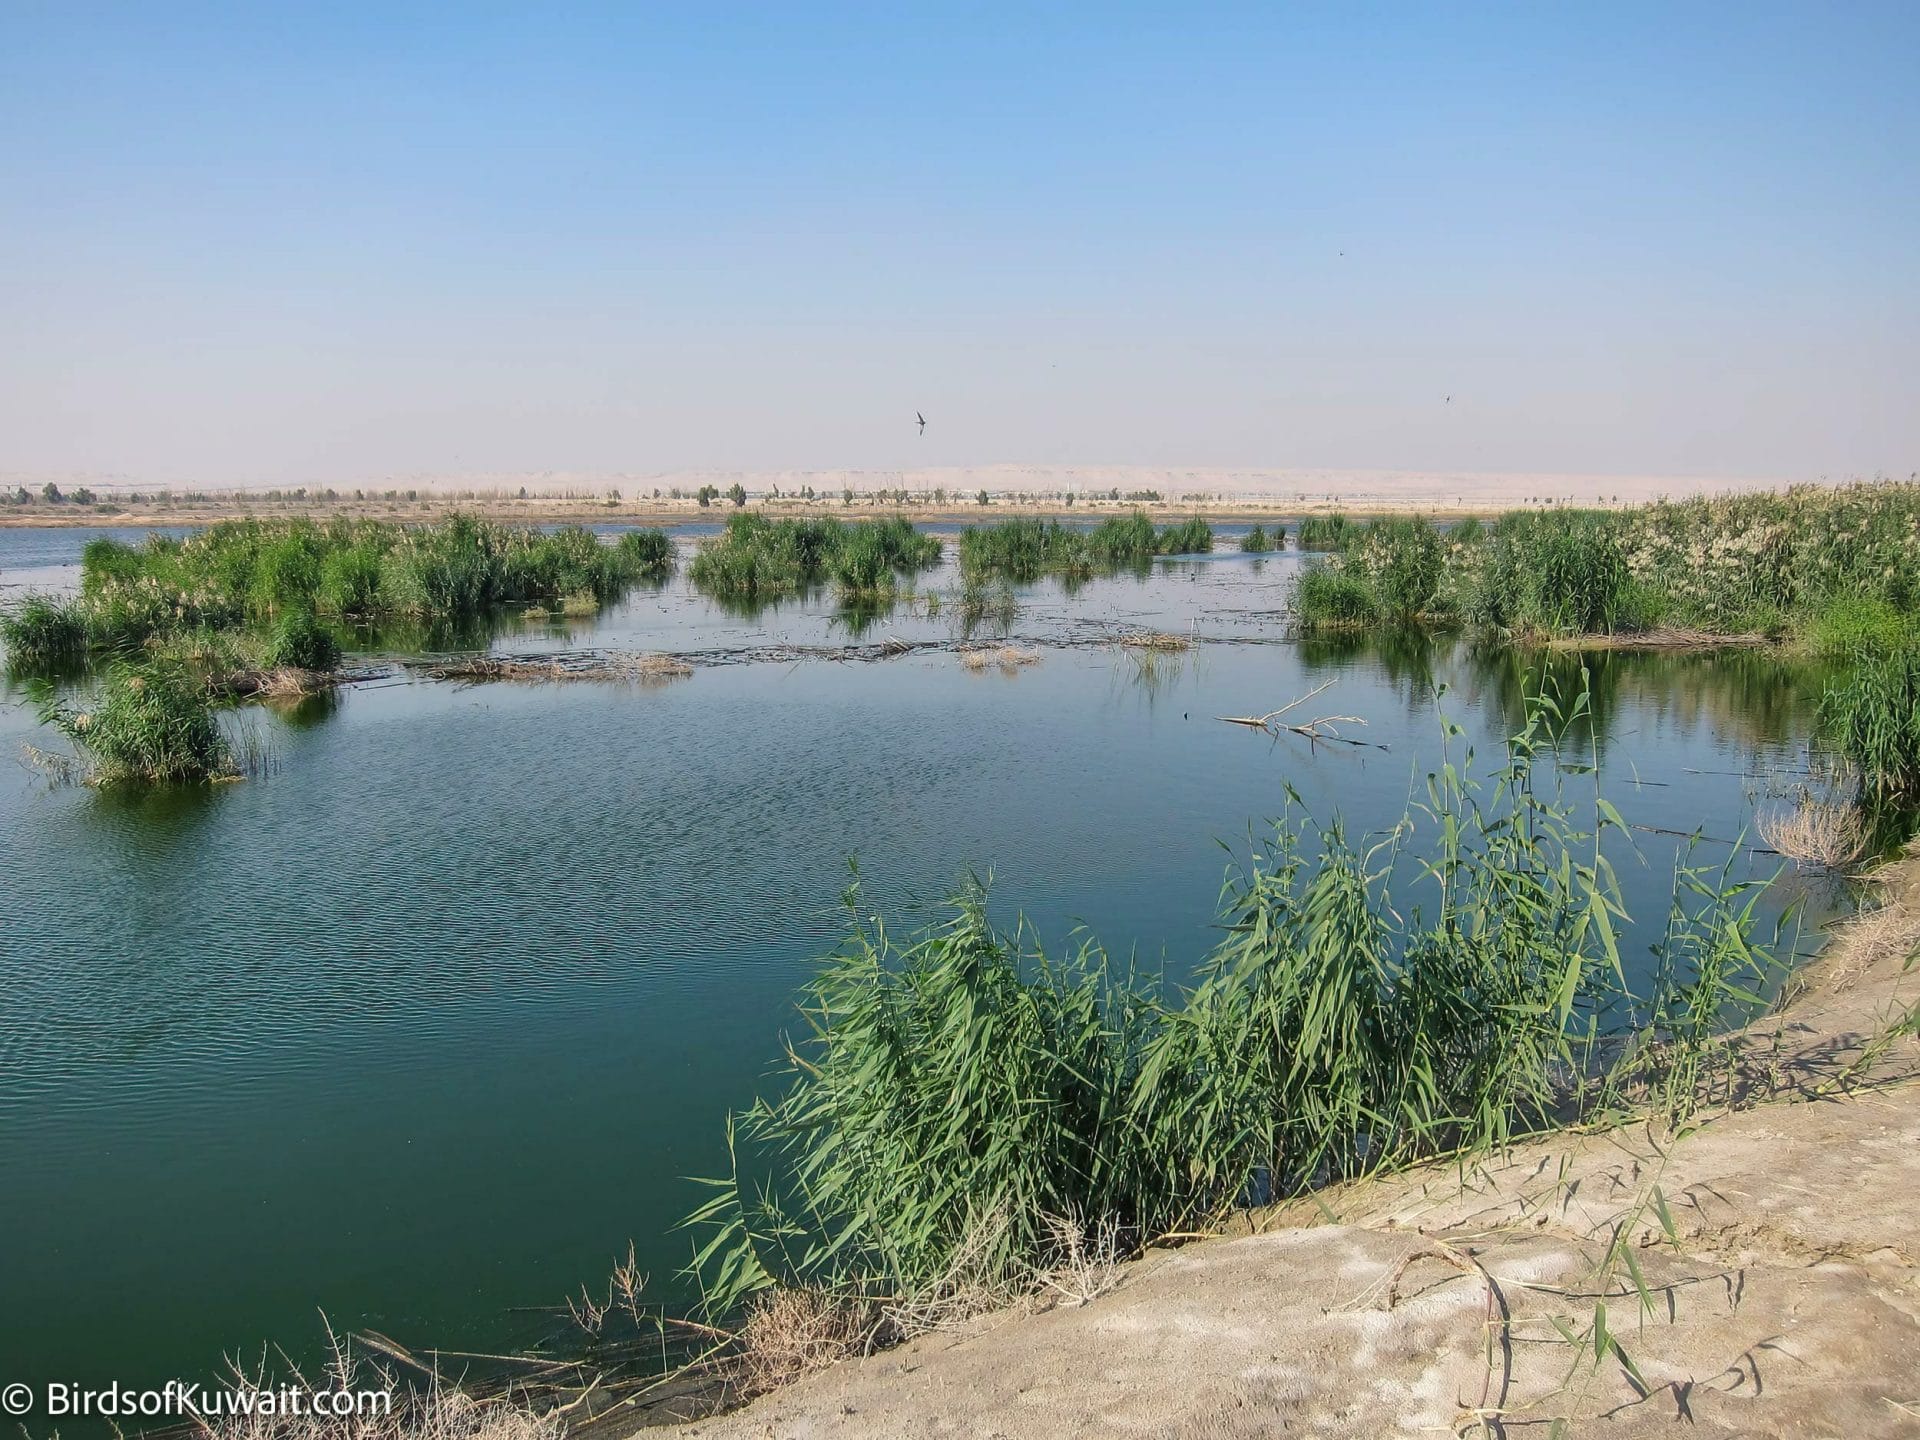 Birdwatching Sites in Kuwait: Jahra Pools Reserve